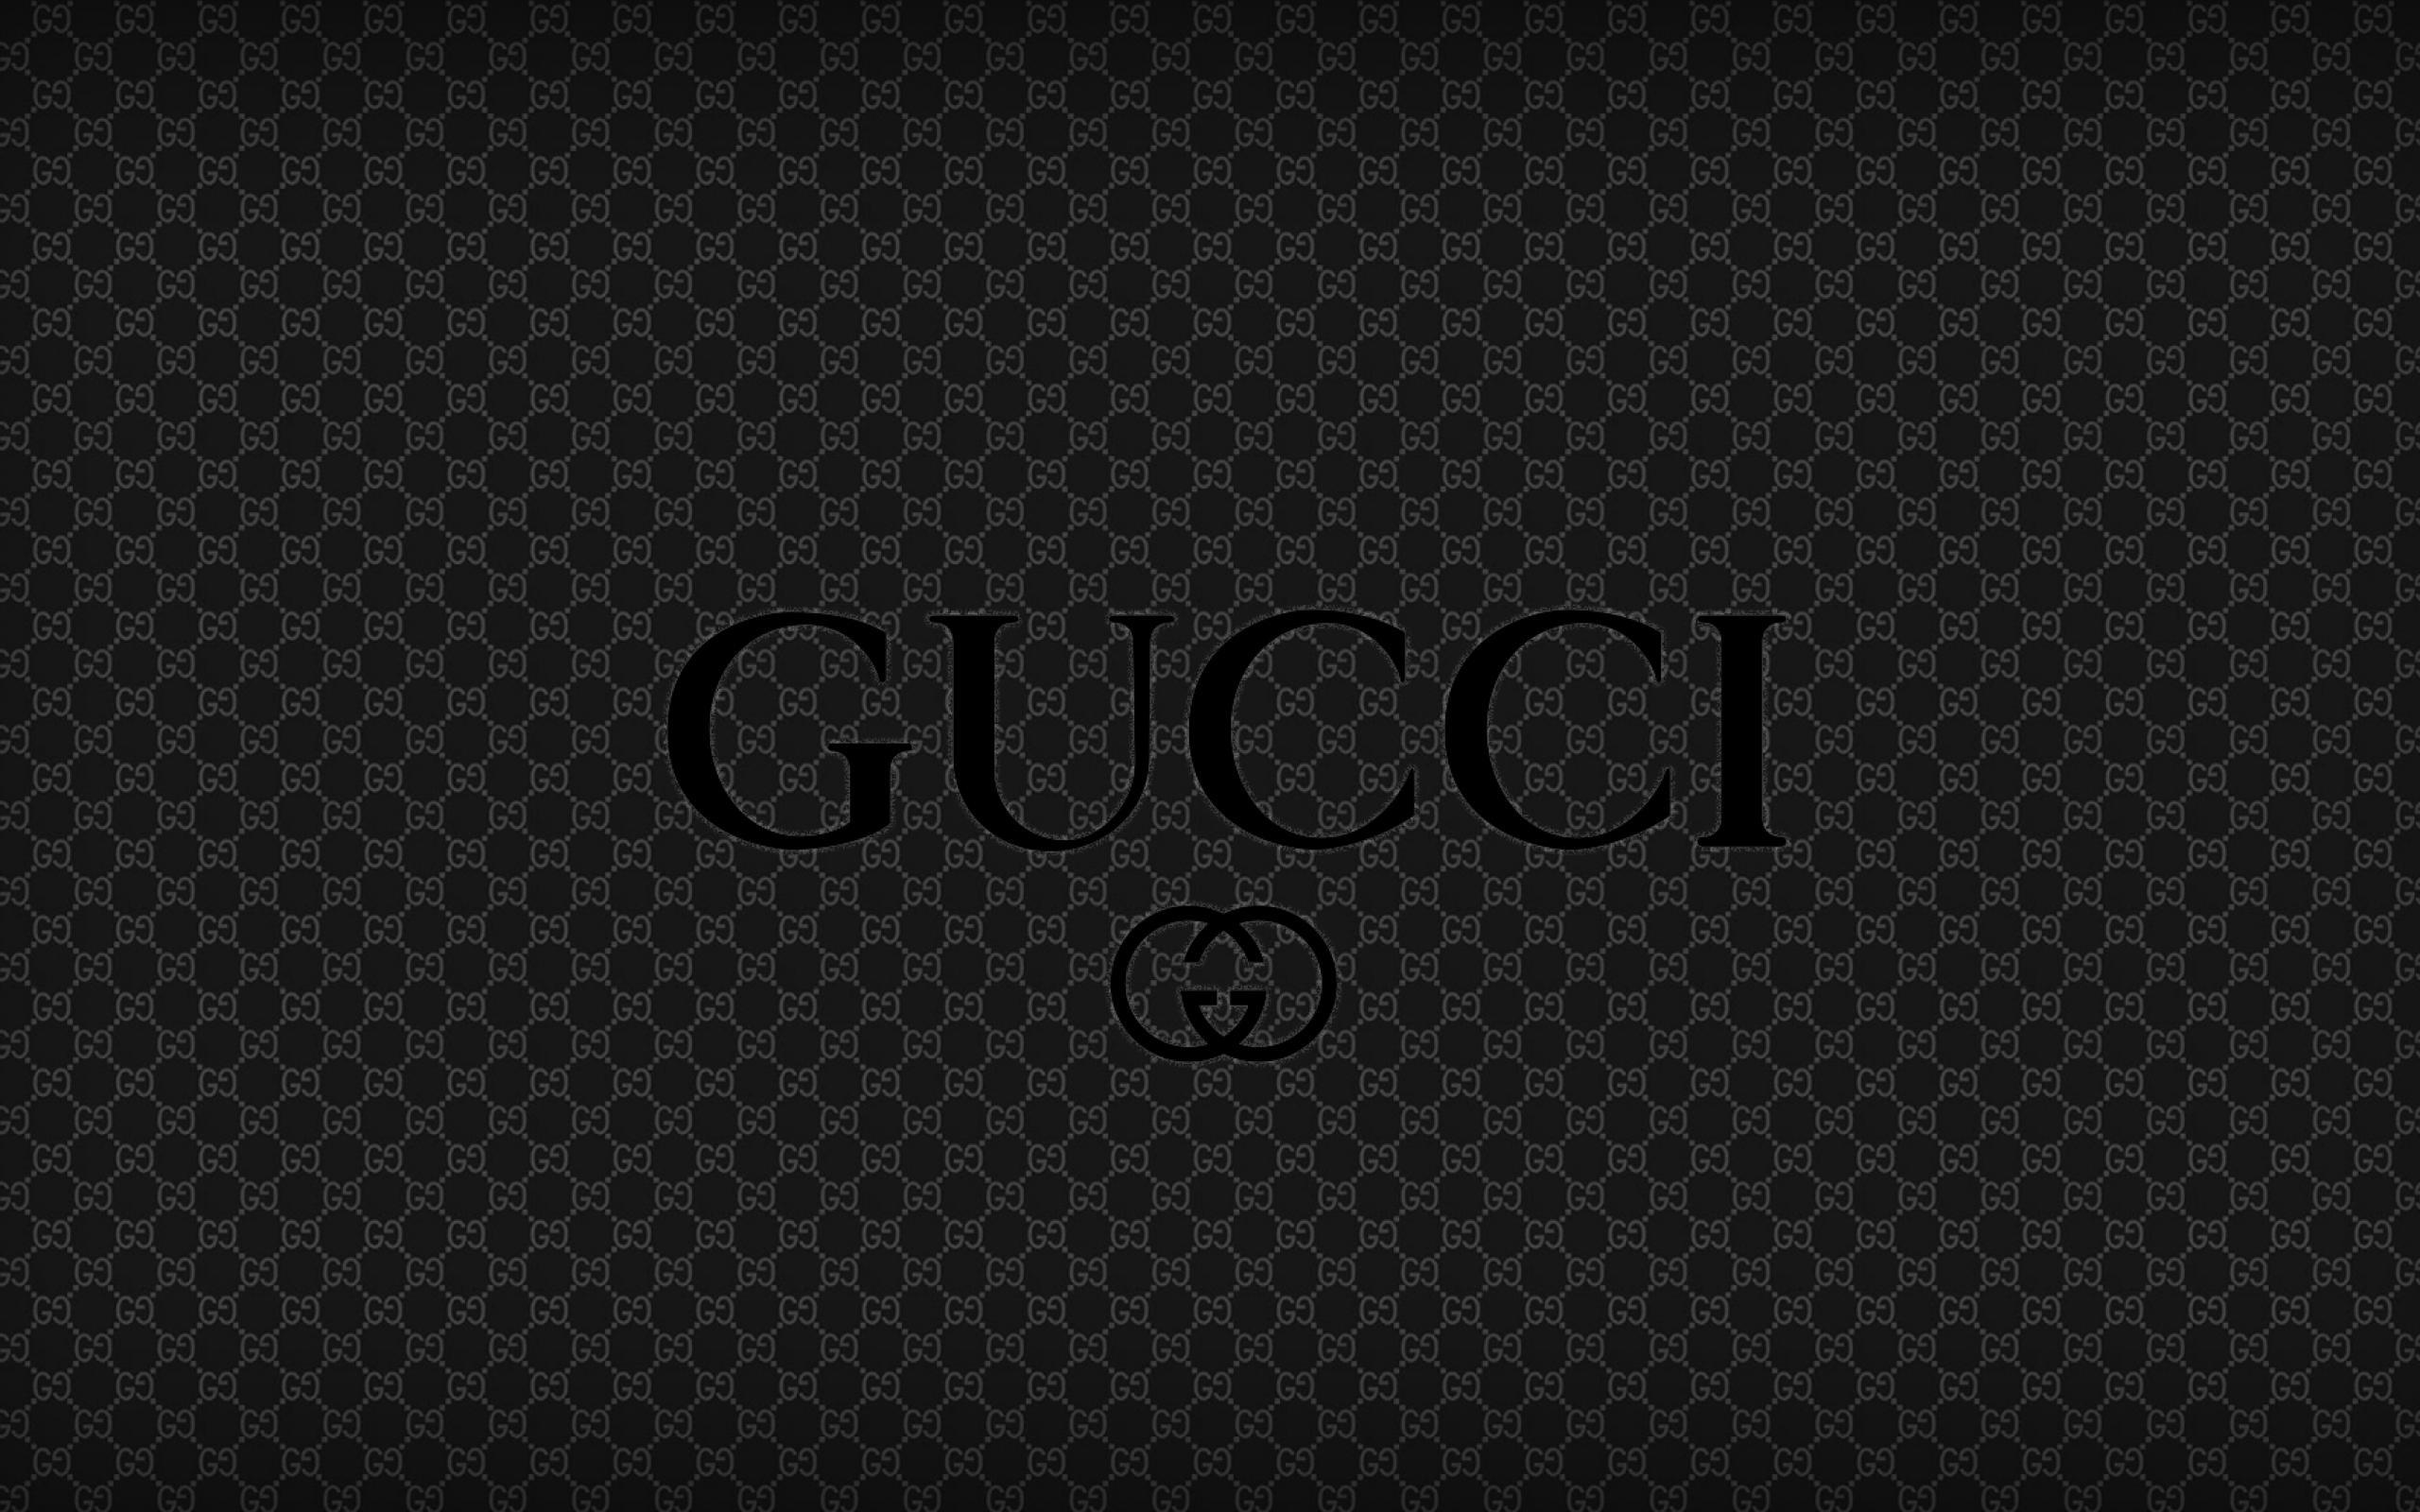 Gucci Supreme Wallpapers - Wallpaper Cave